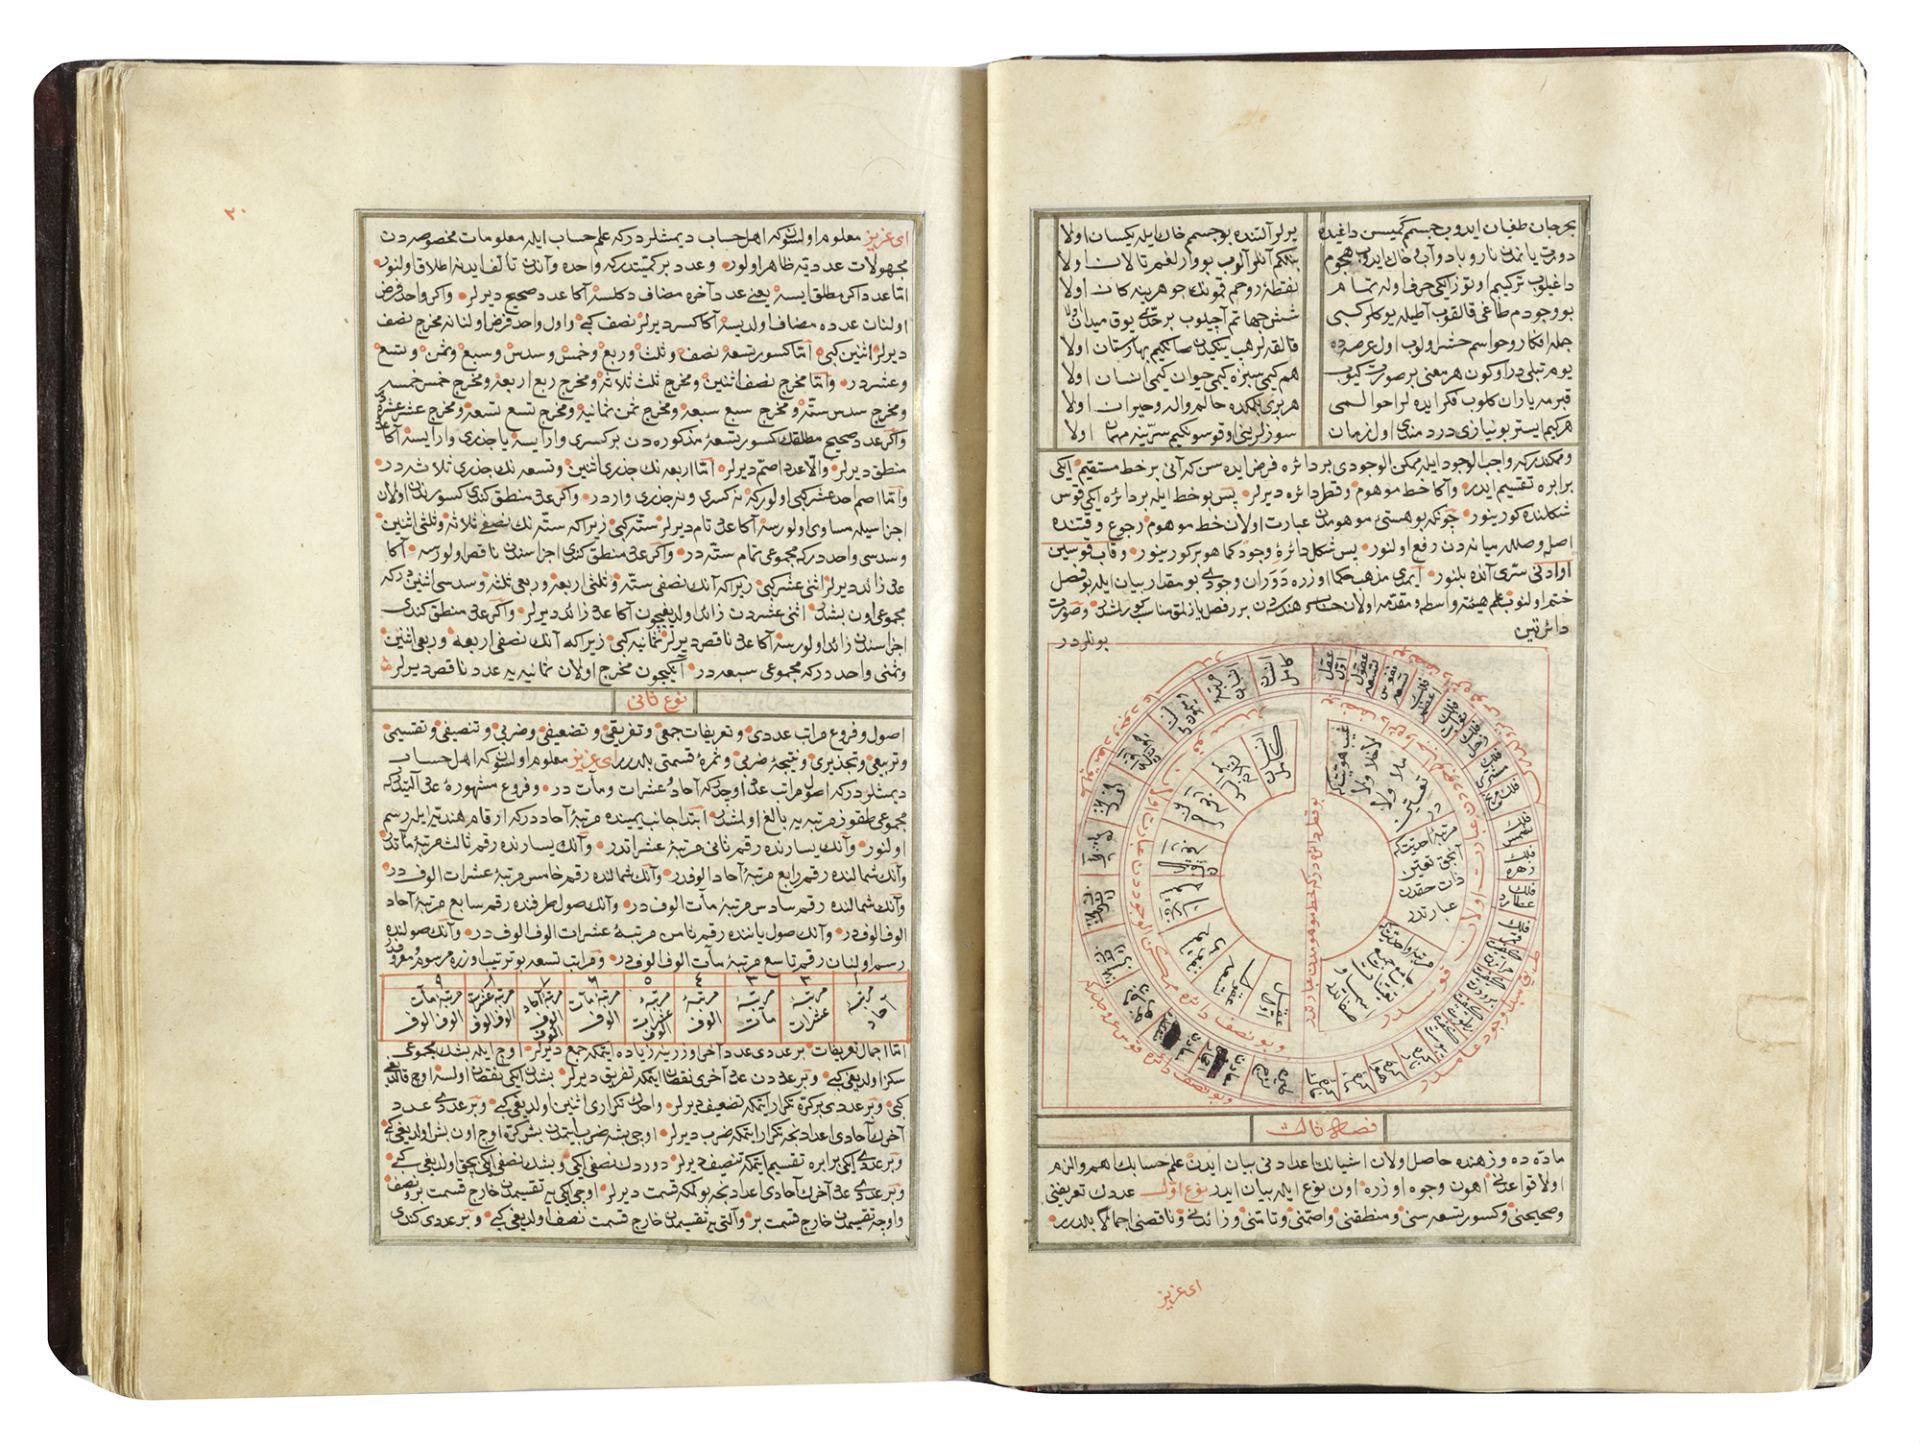 MARIFETNAME, IBRAHIM HAKKI, COPIED BY SAE'D ALLAH BIN ALI BIN AHMED, TURKEY, 1221 AH/1806 AD - Image 11 of 58